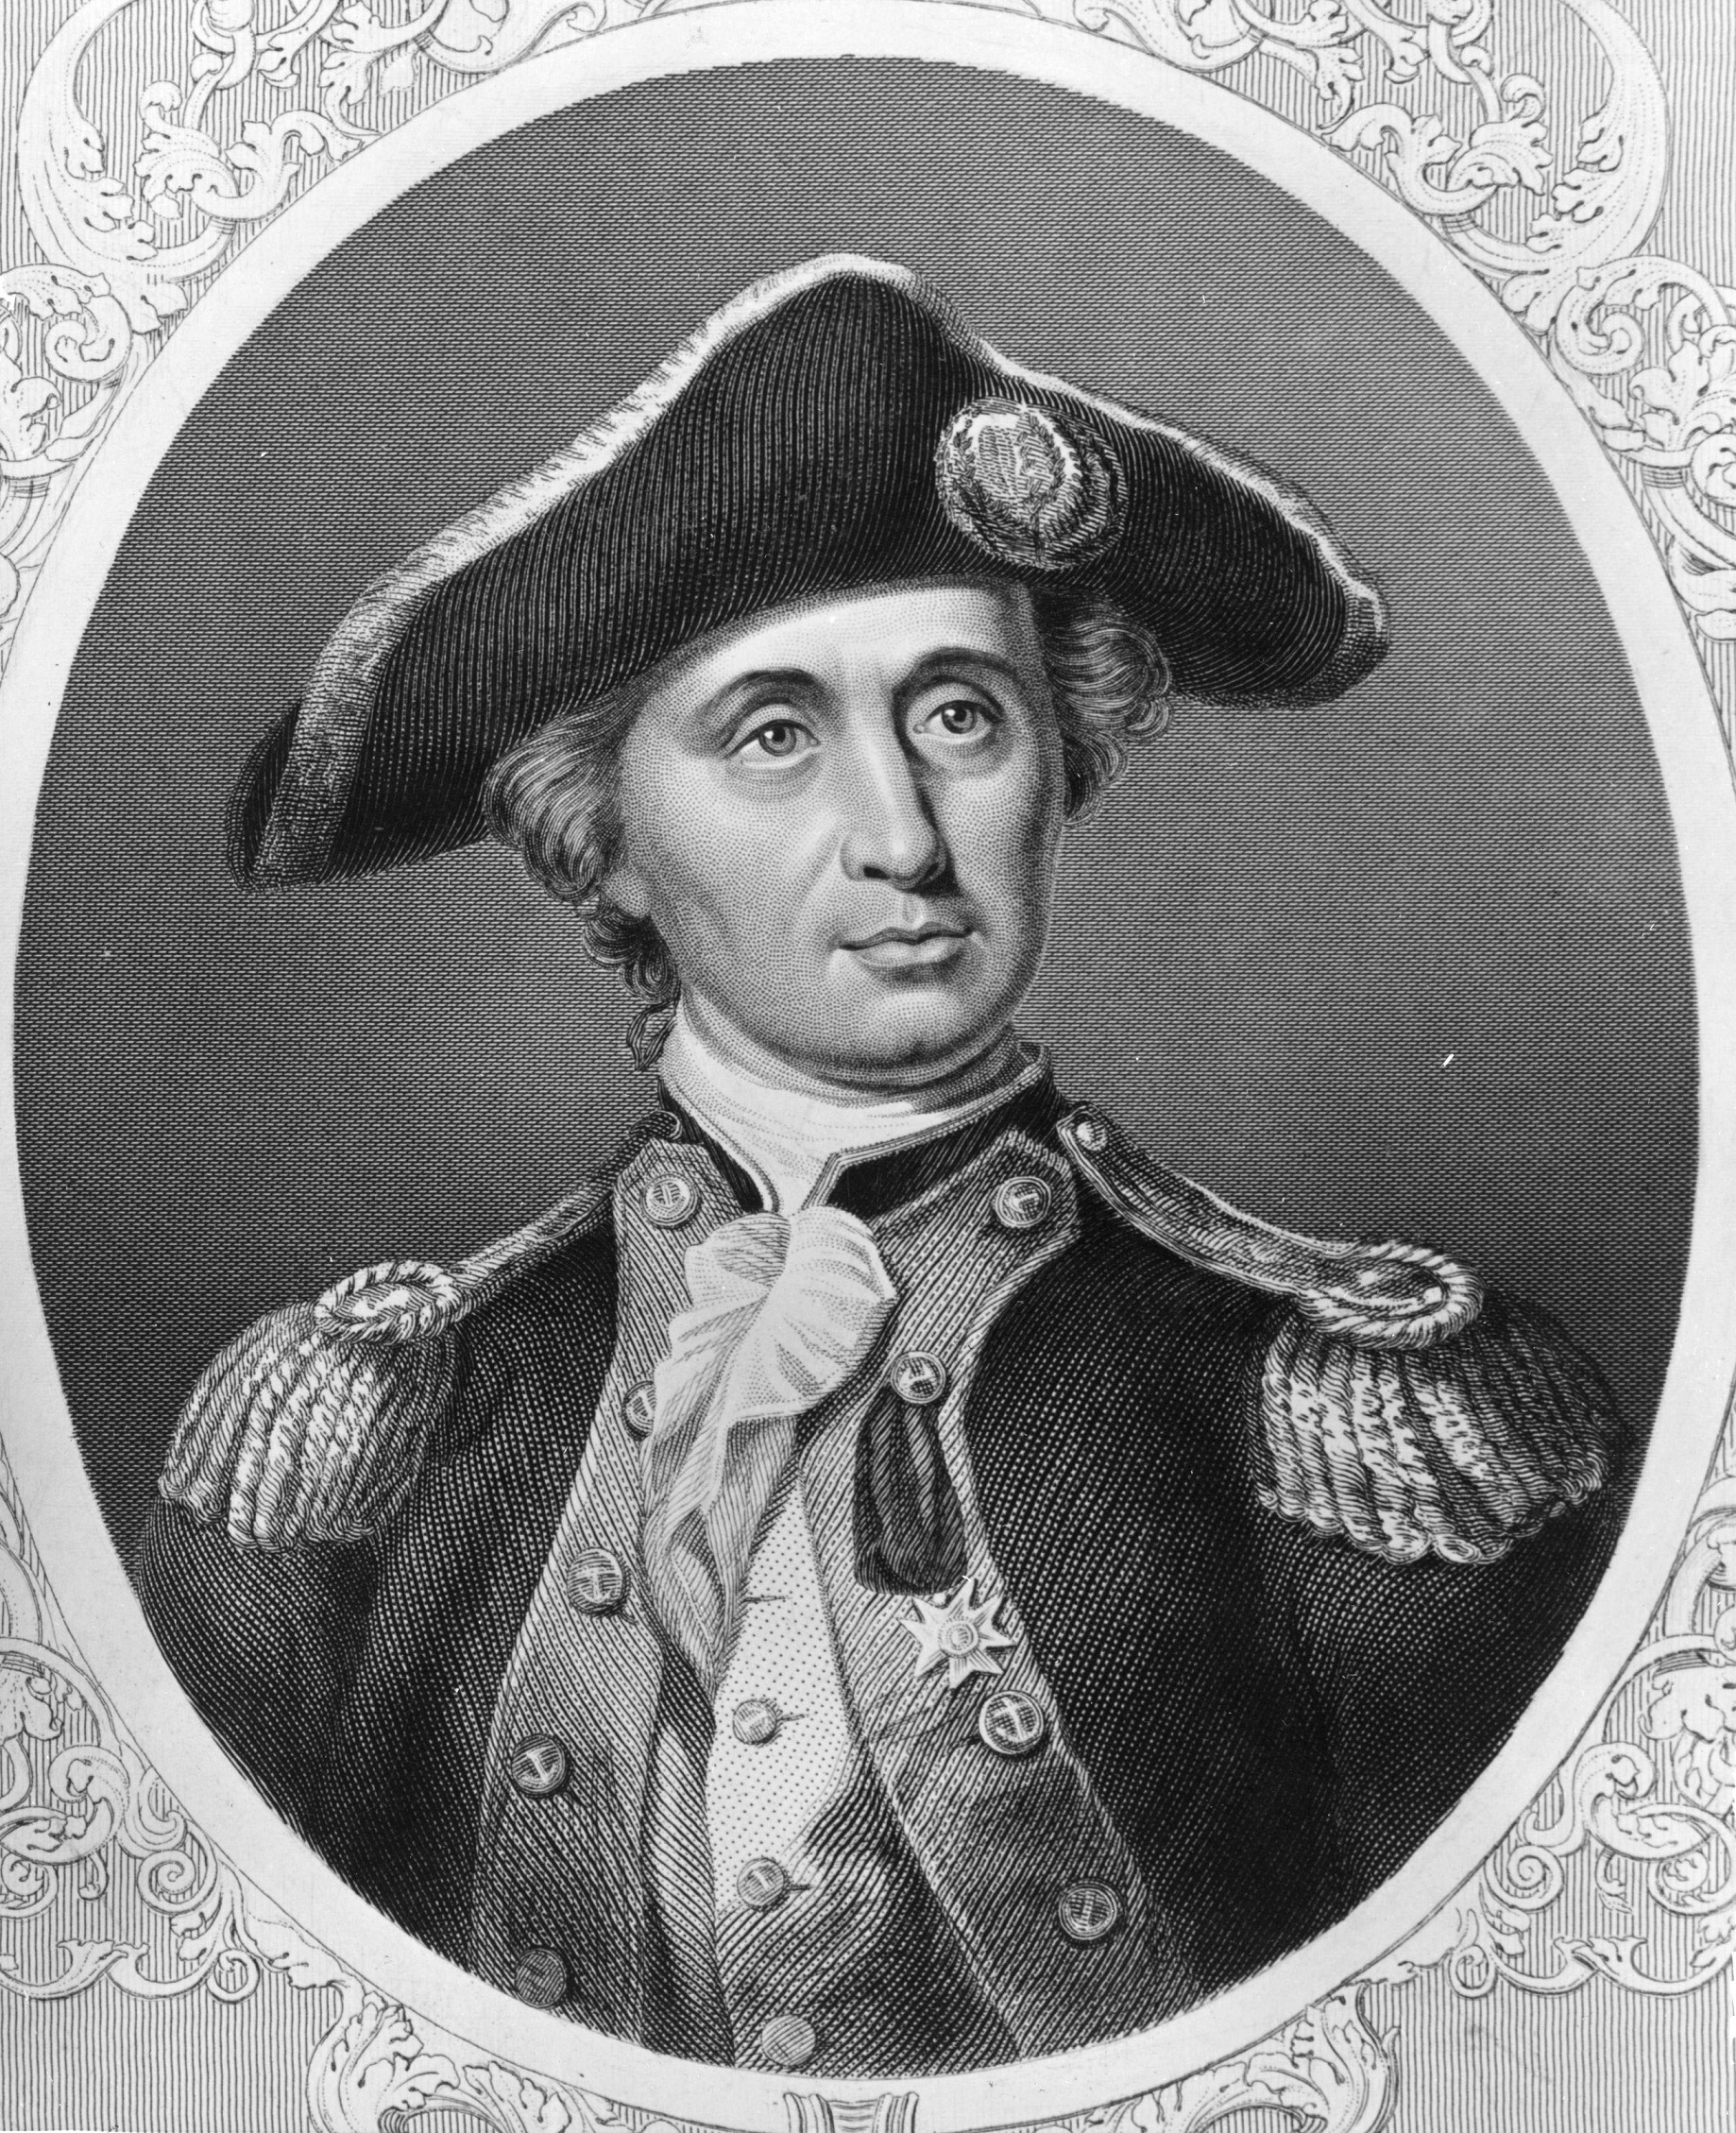 A black and white illustration of John Paul Jones, Scottish-born American naval adventurer 